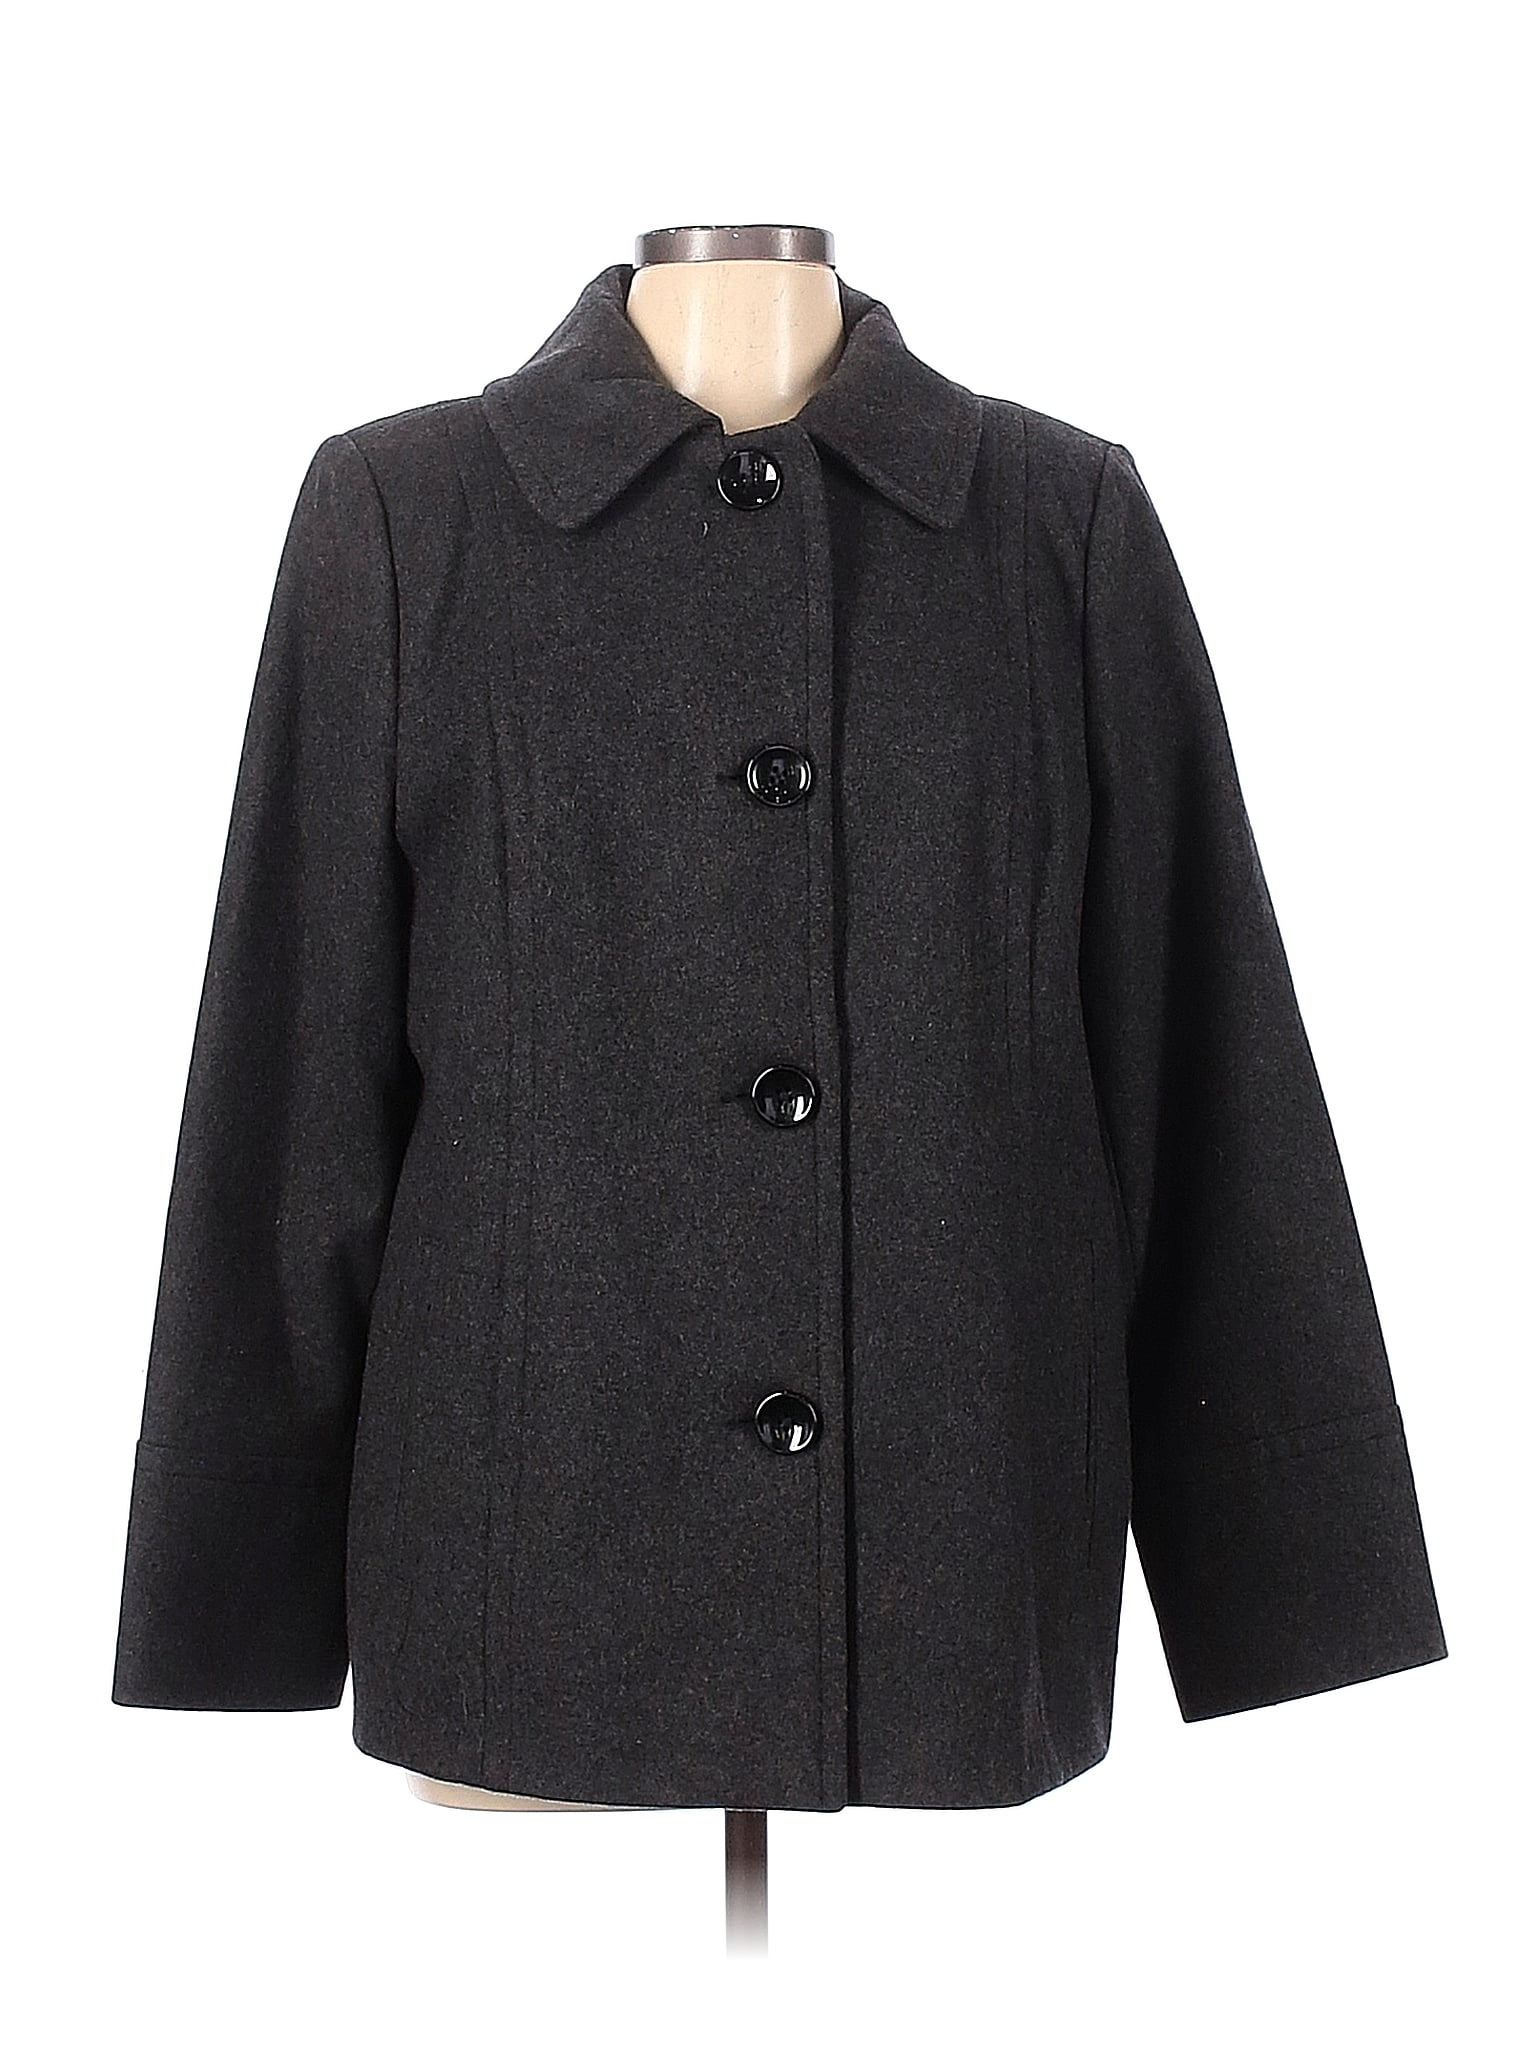 London Fog 100% Polyester Gray Jacket Size L - 74% off | thredUP